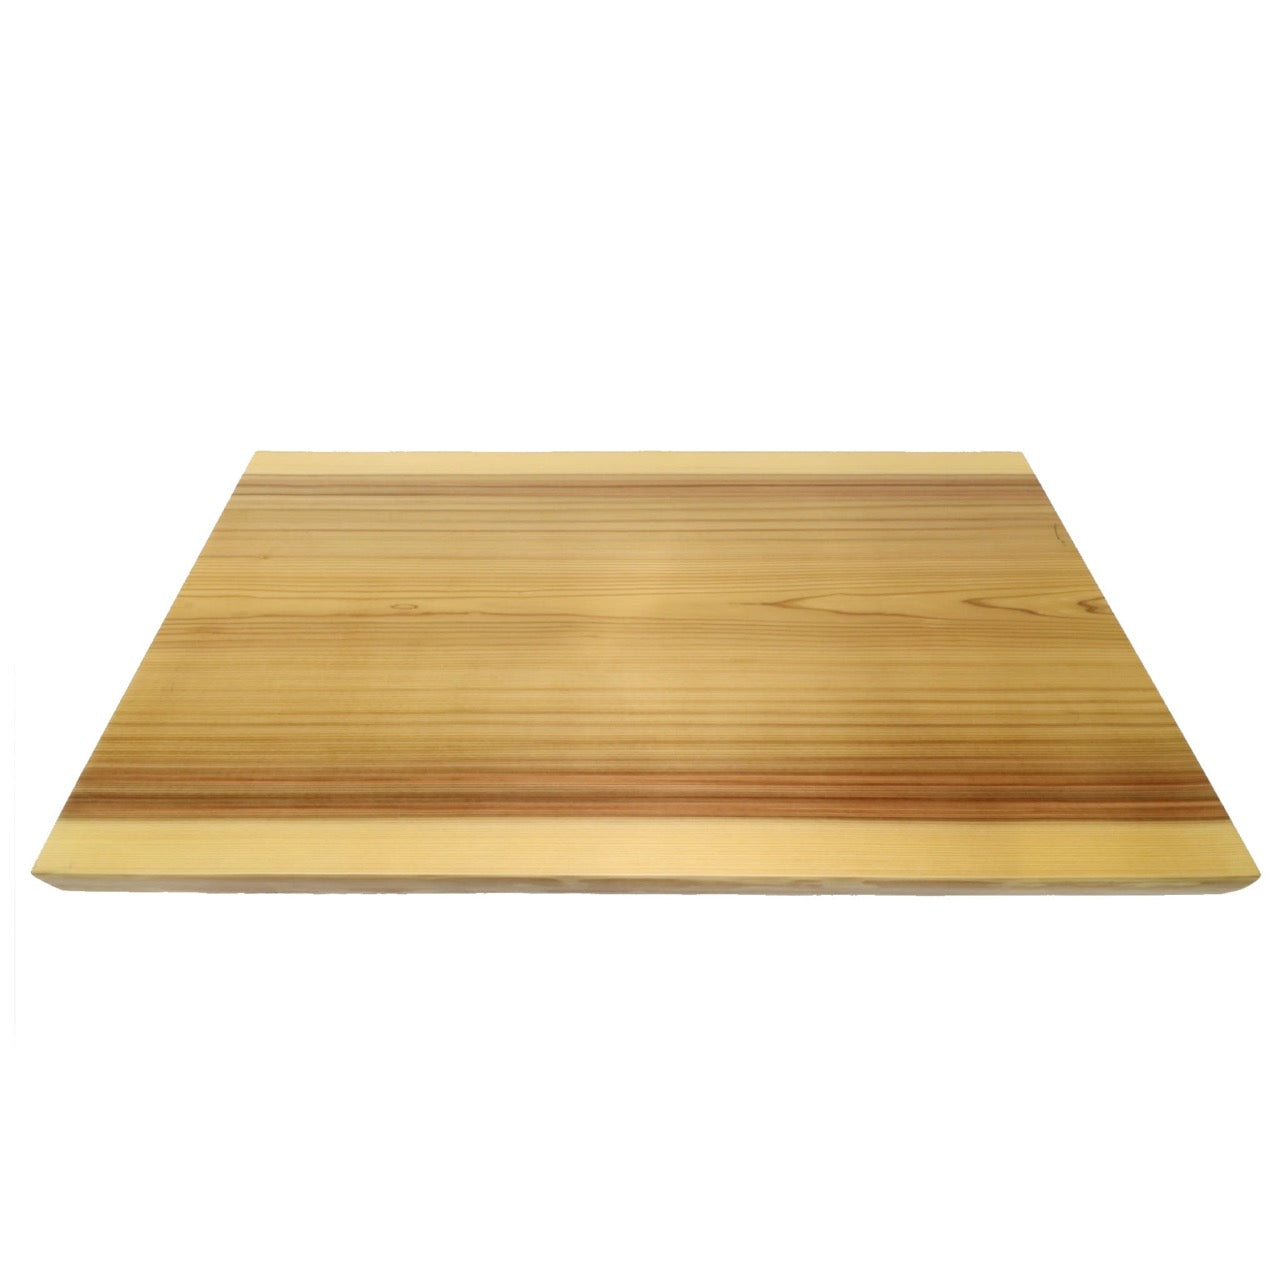 A0001 吉野杉無垢一枚板 テーブル天板 1,510mm×820mm×63mm